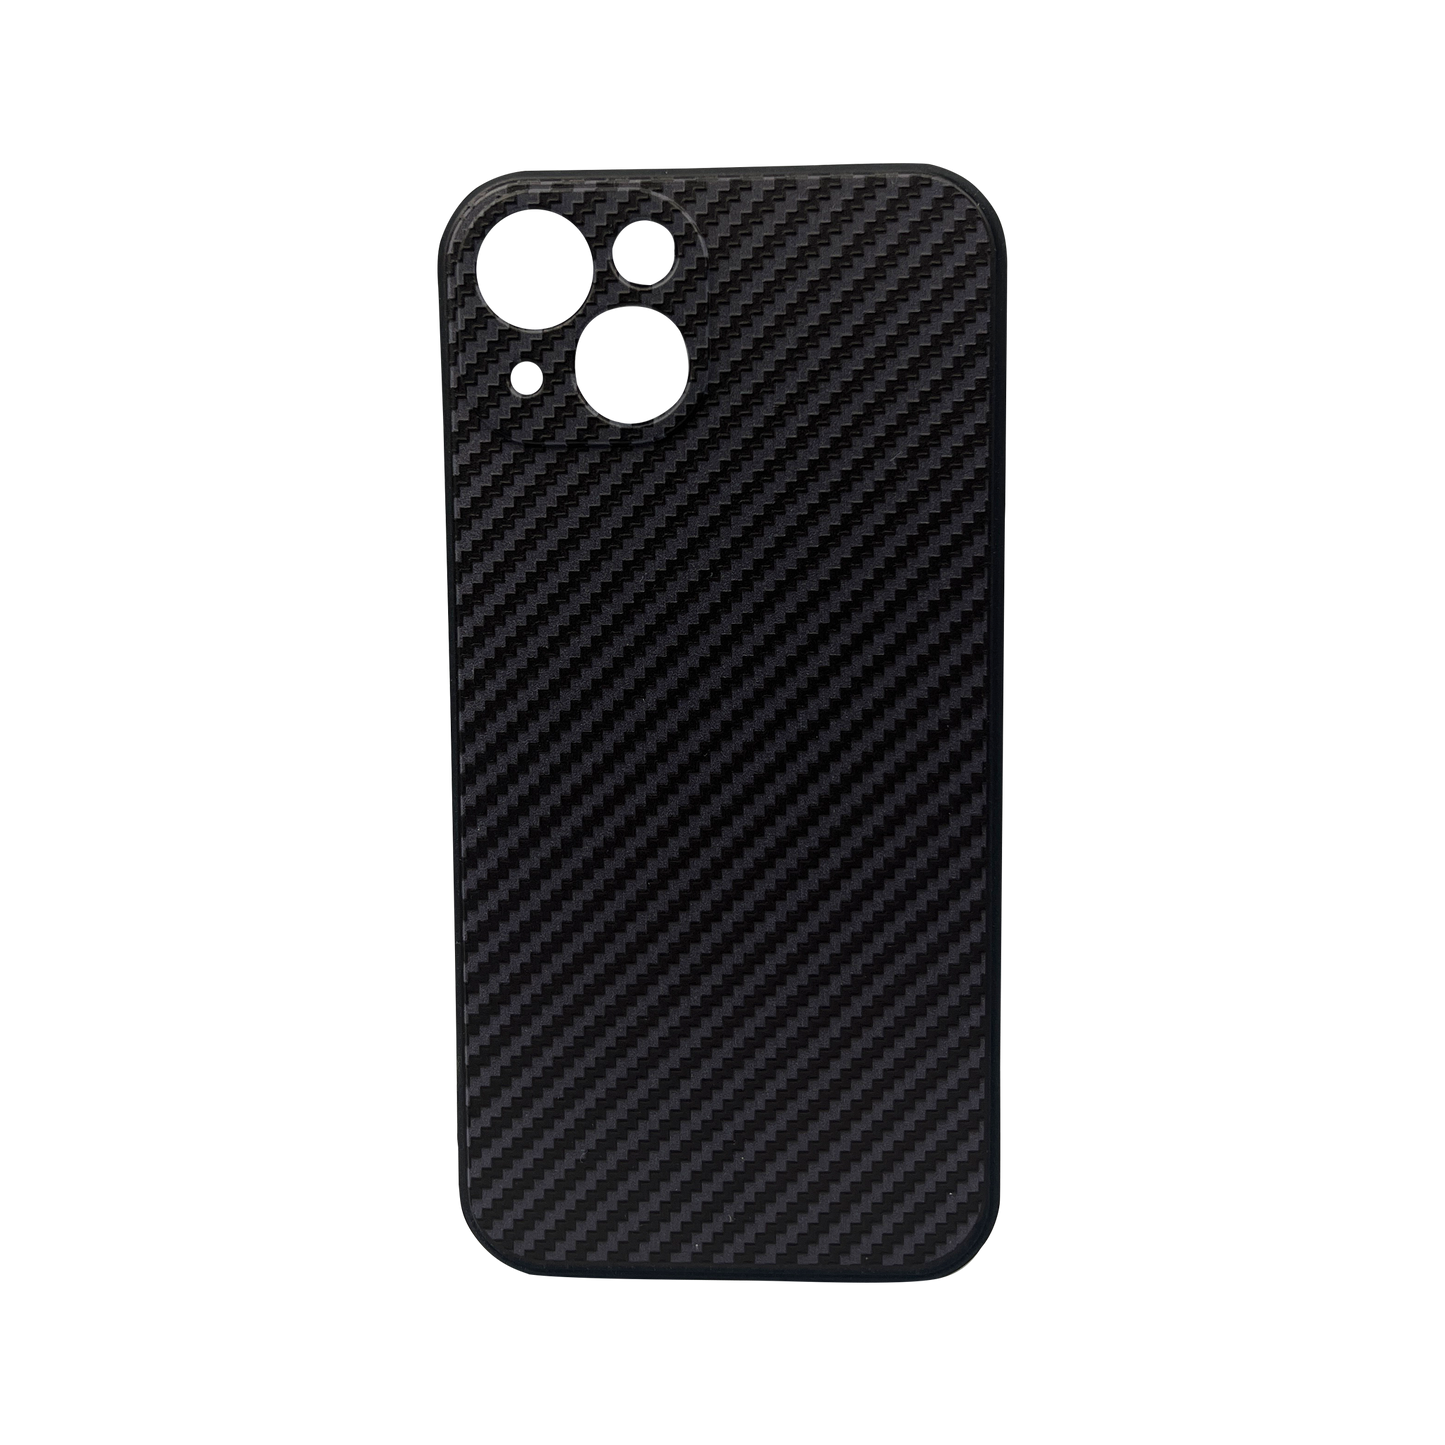 iPhone Carbon Fiber Cover